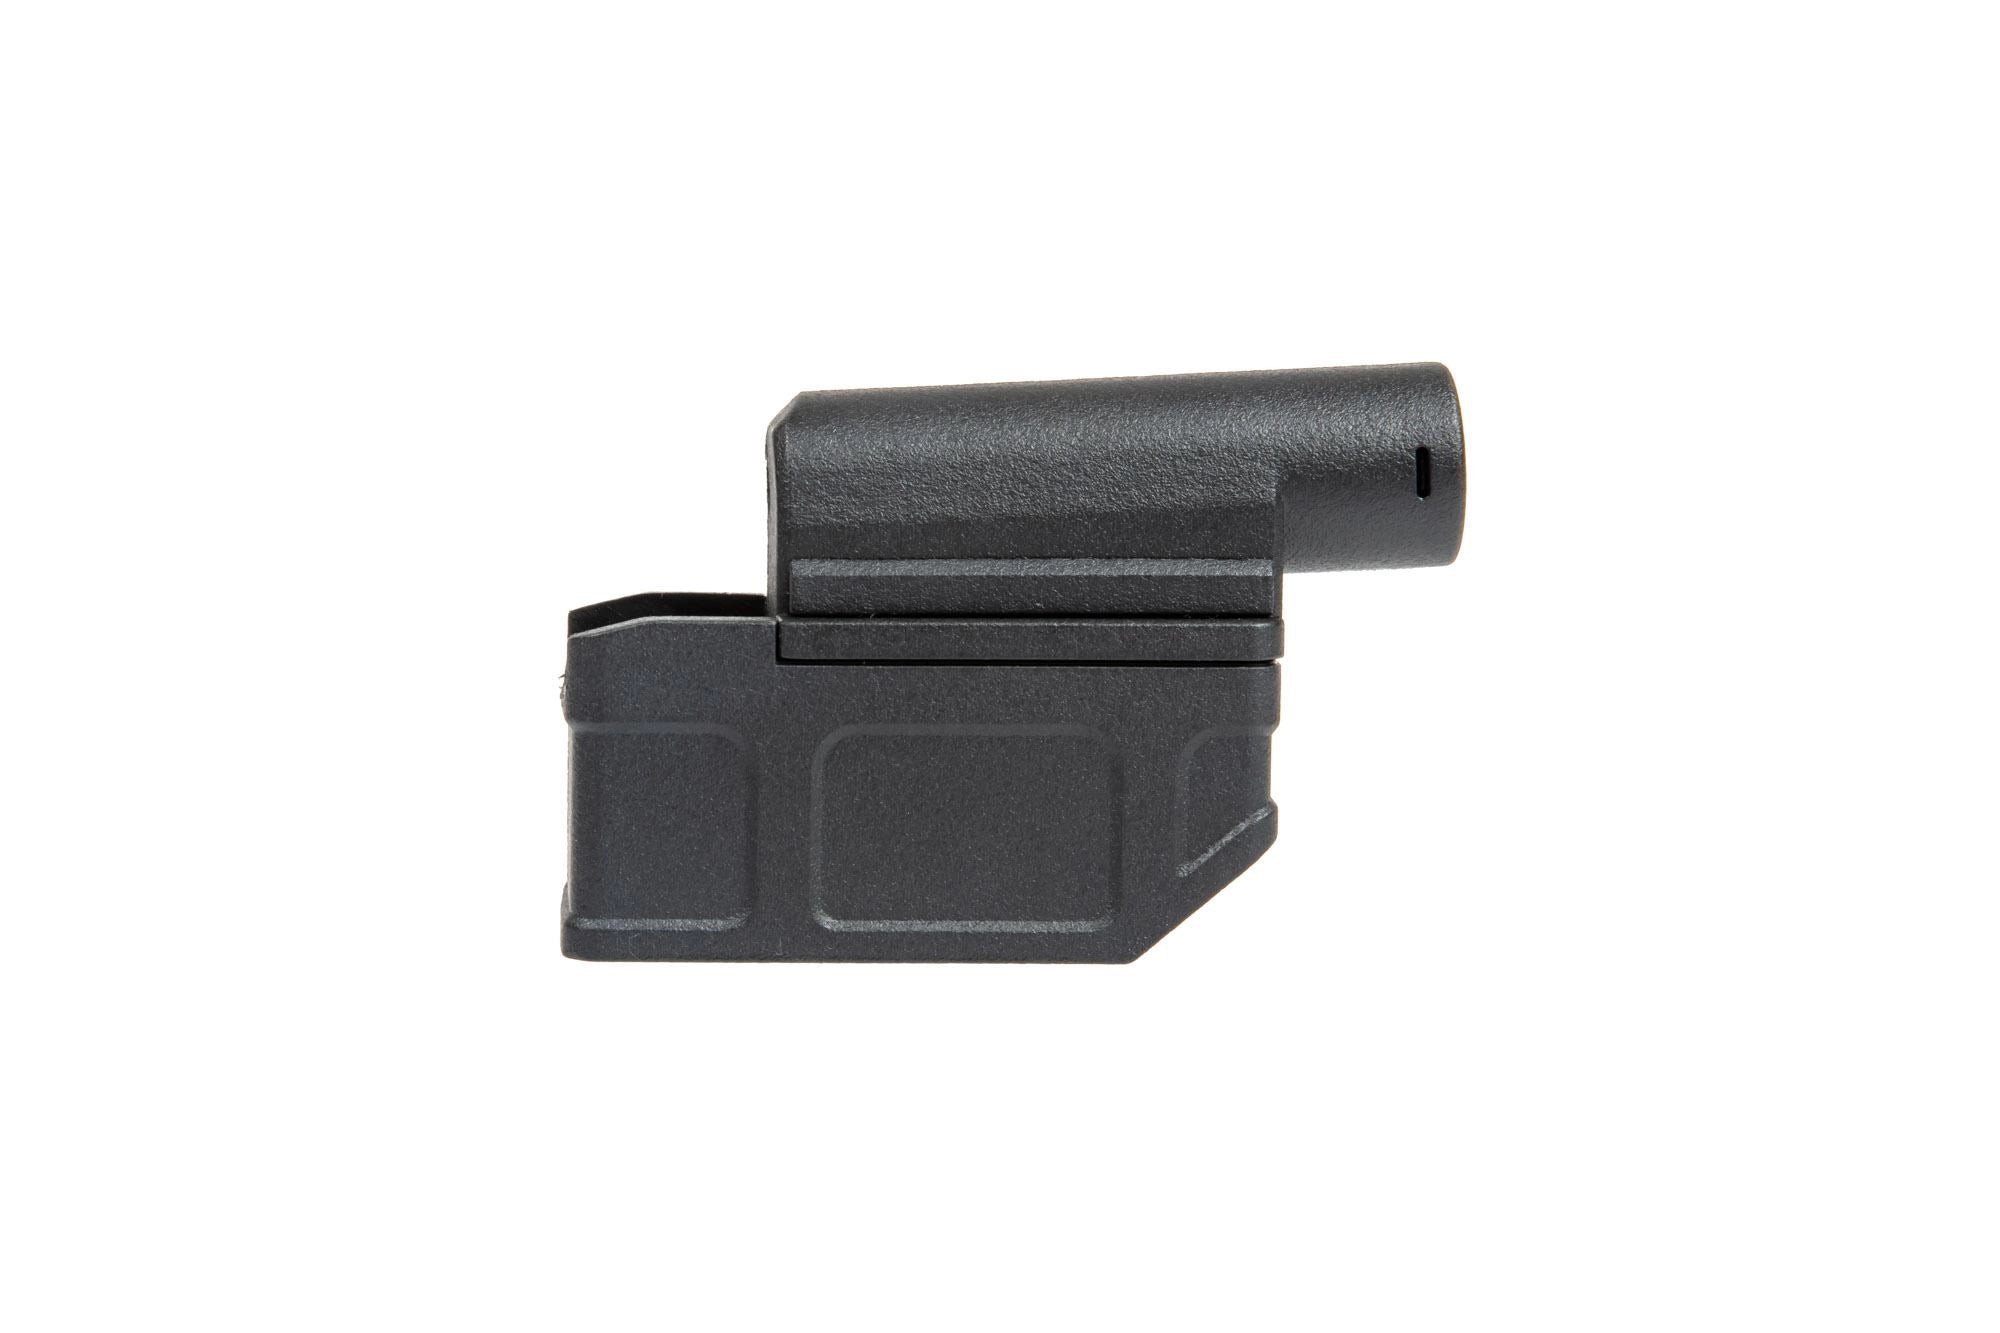 M4 Magazine Adapter for Shotgun - Black